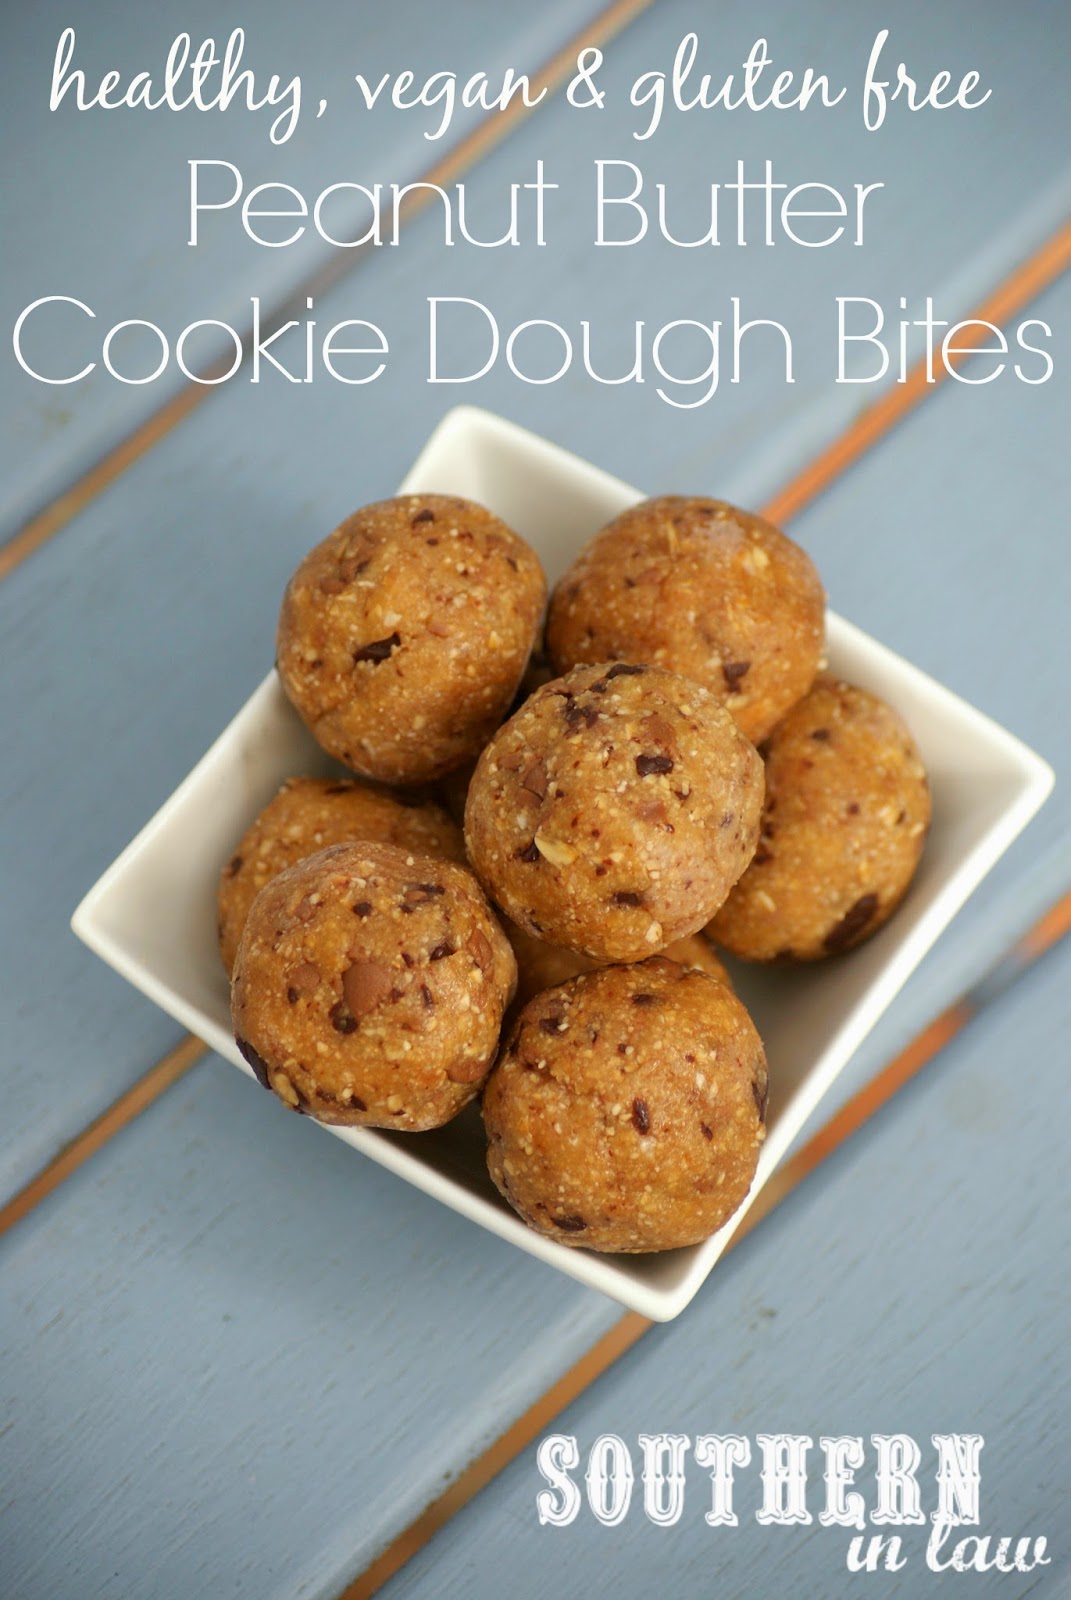 Healthy Vegan Peanut Butter Cookie Dough Balls Recipe - Sugar free, gluten free, egg free, raw, vegan